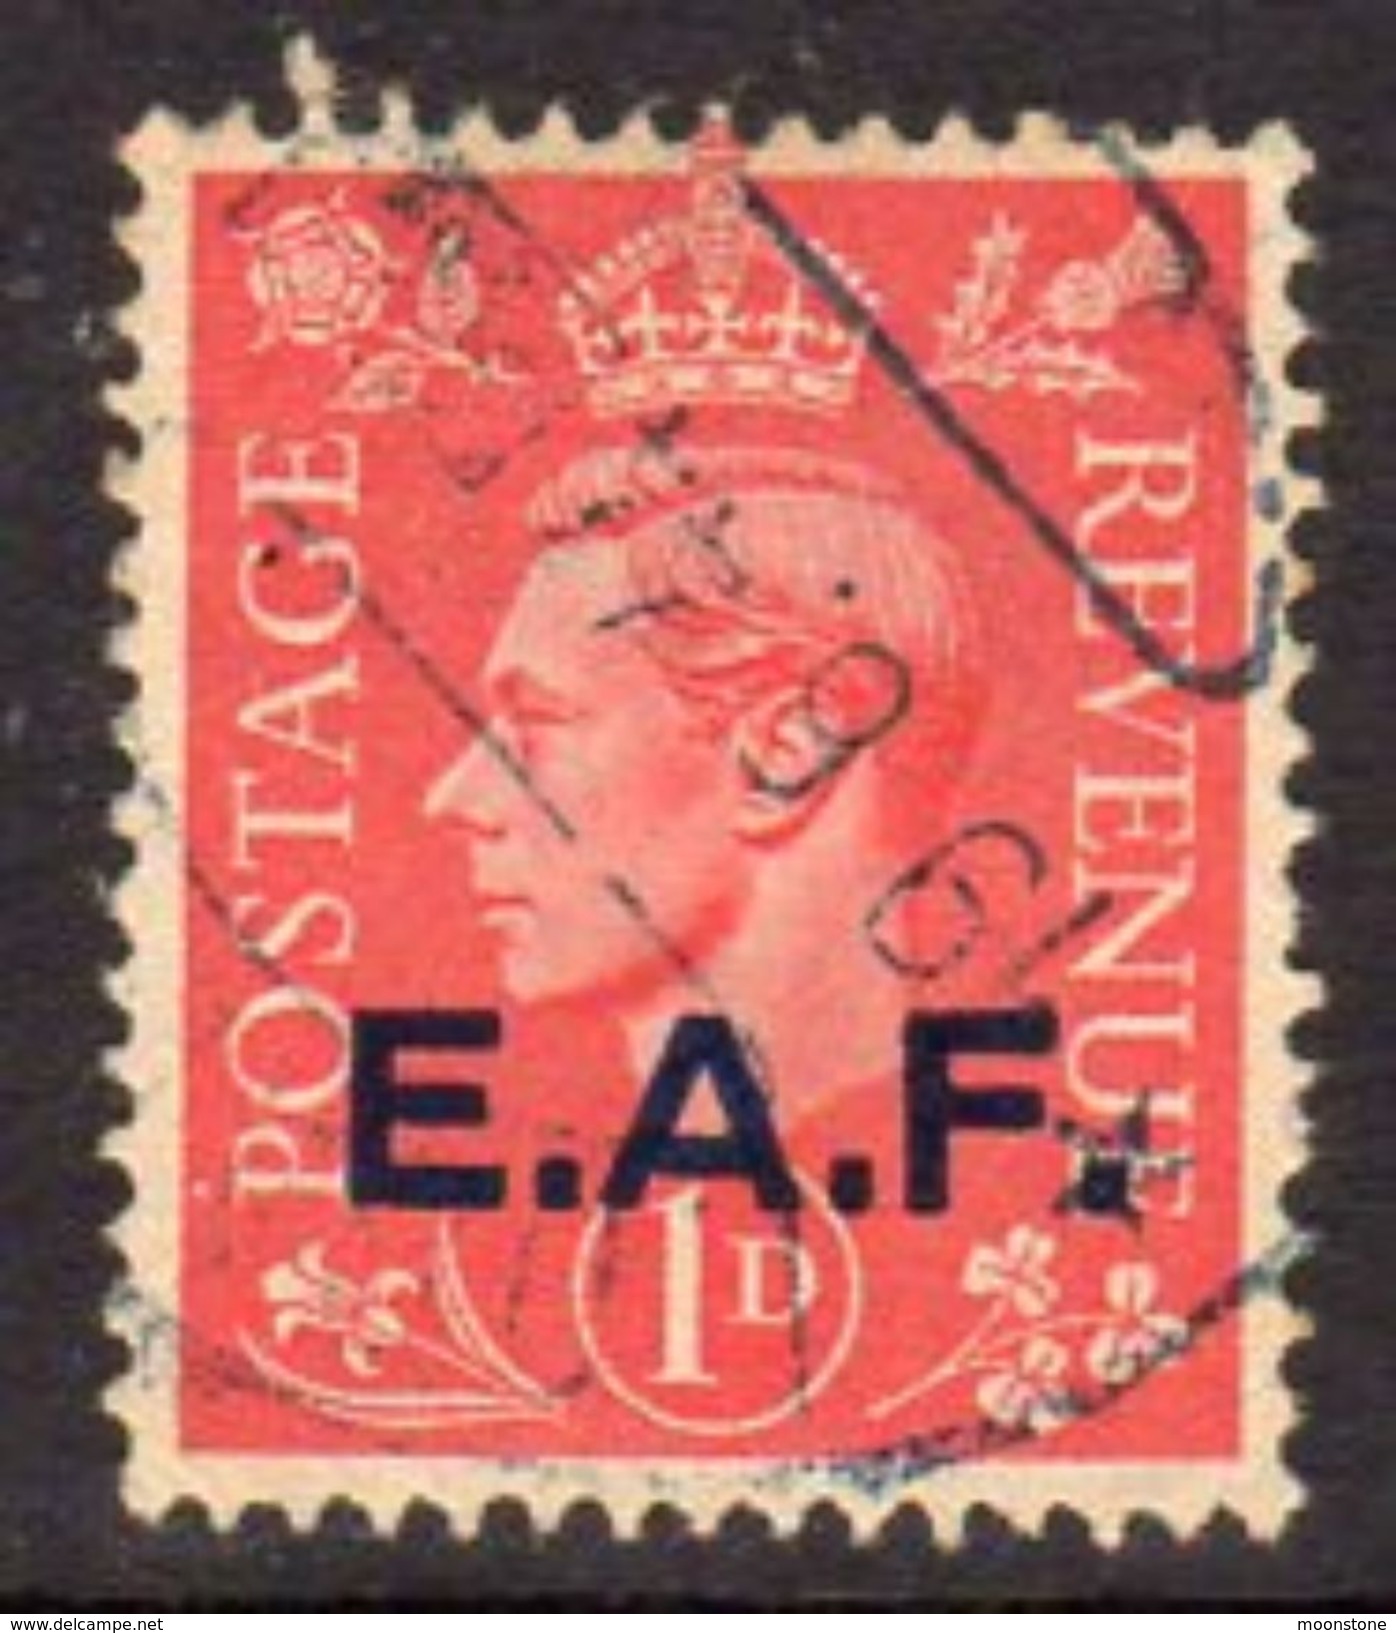 BOIC, Somalia EAF 1943-6 1d Overprint On GB, Used, SG S1 (A) - Somalie